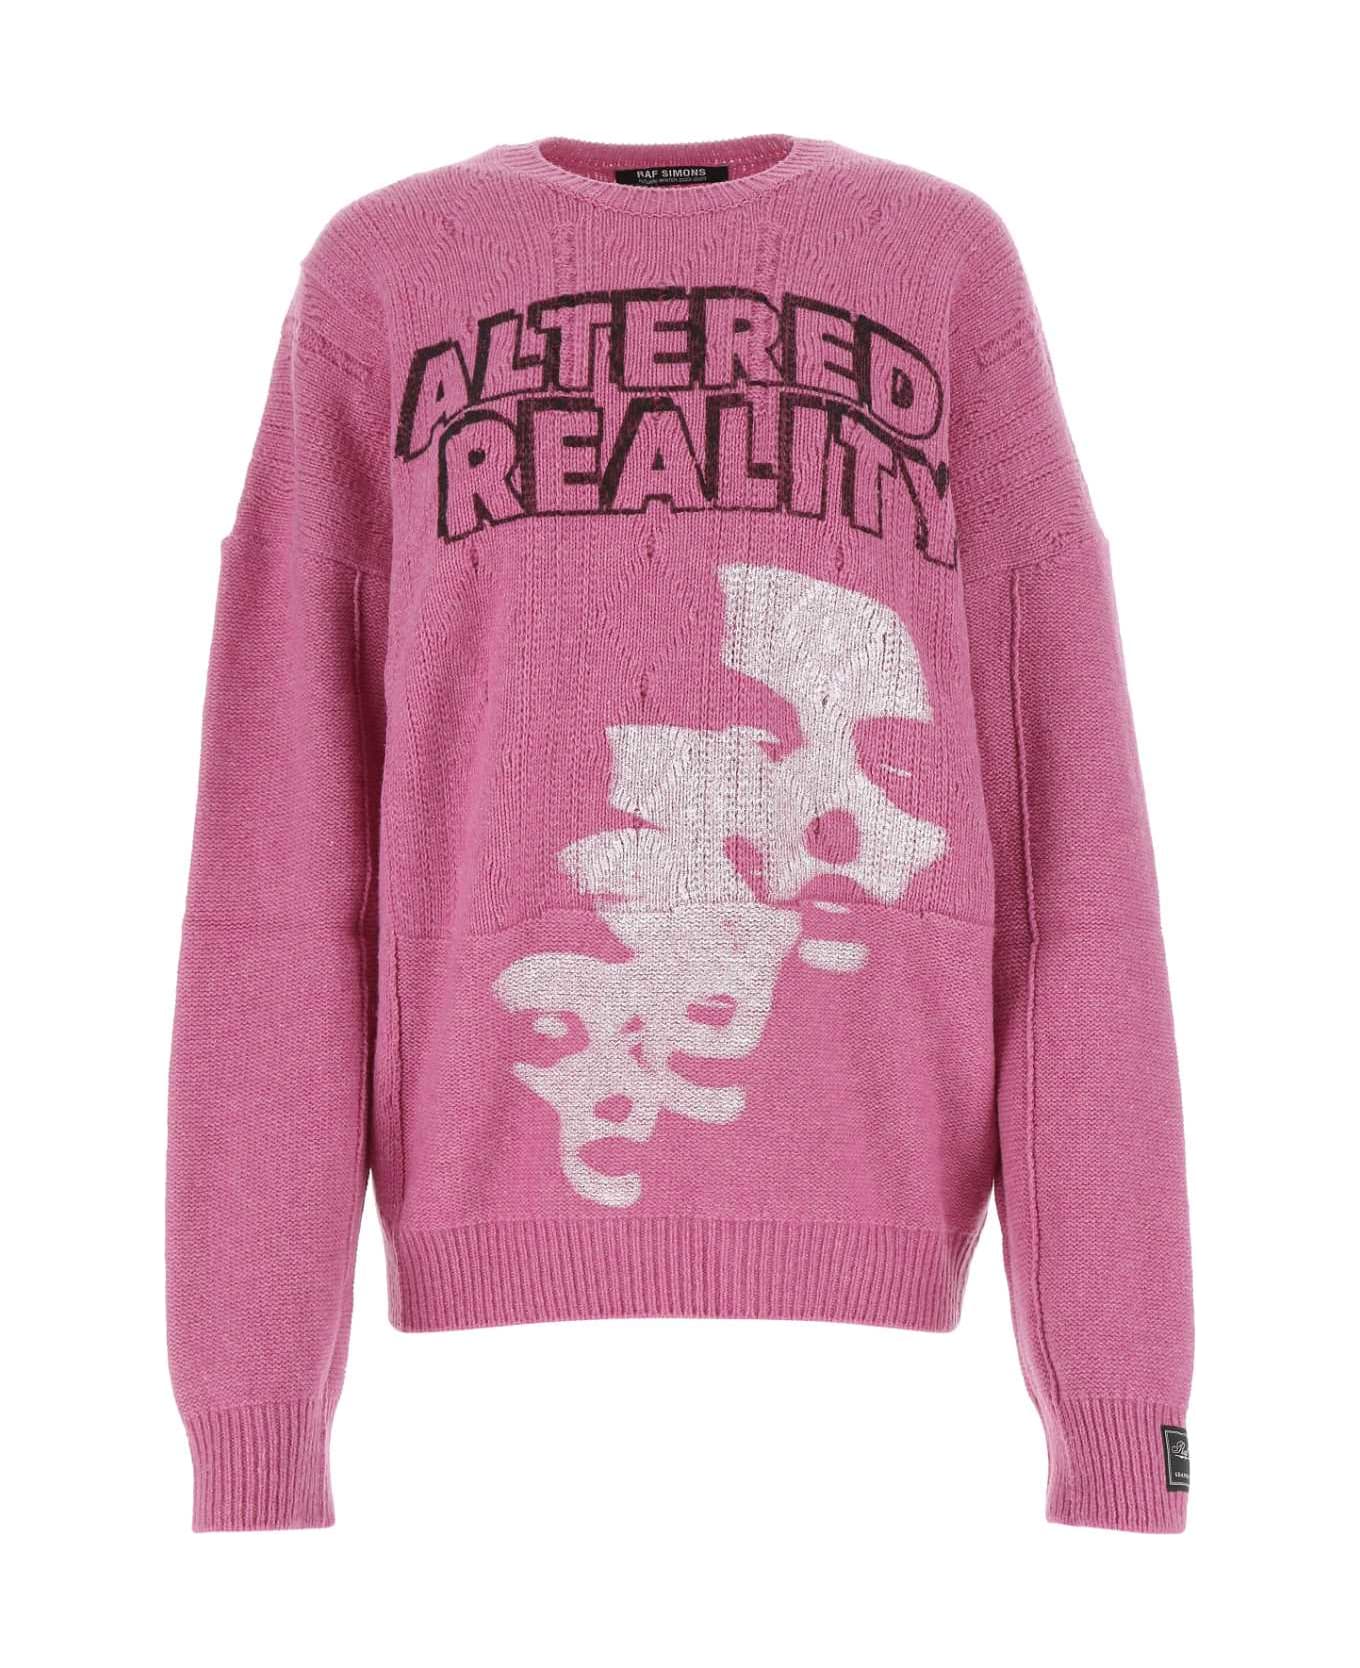 Raf Simons Pink Wool Oversize Sweater - 0059